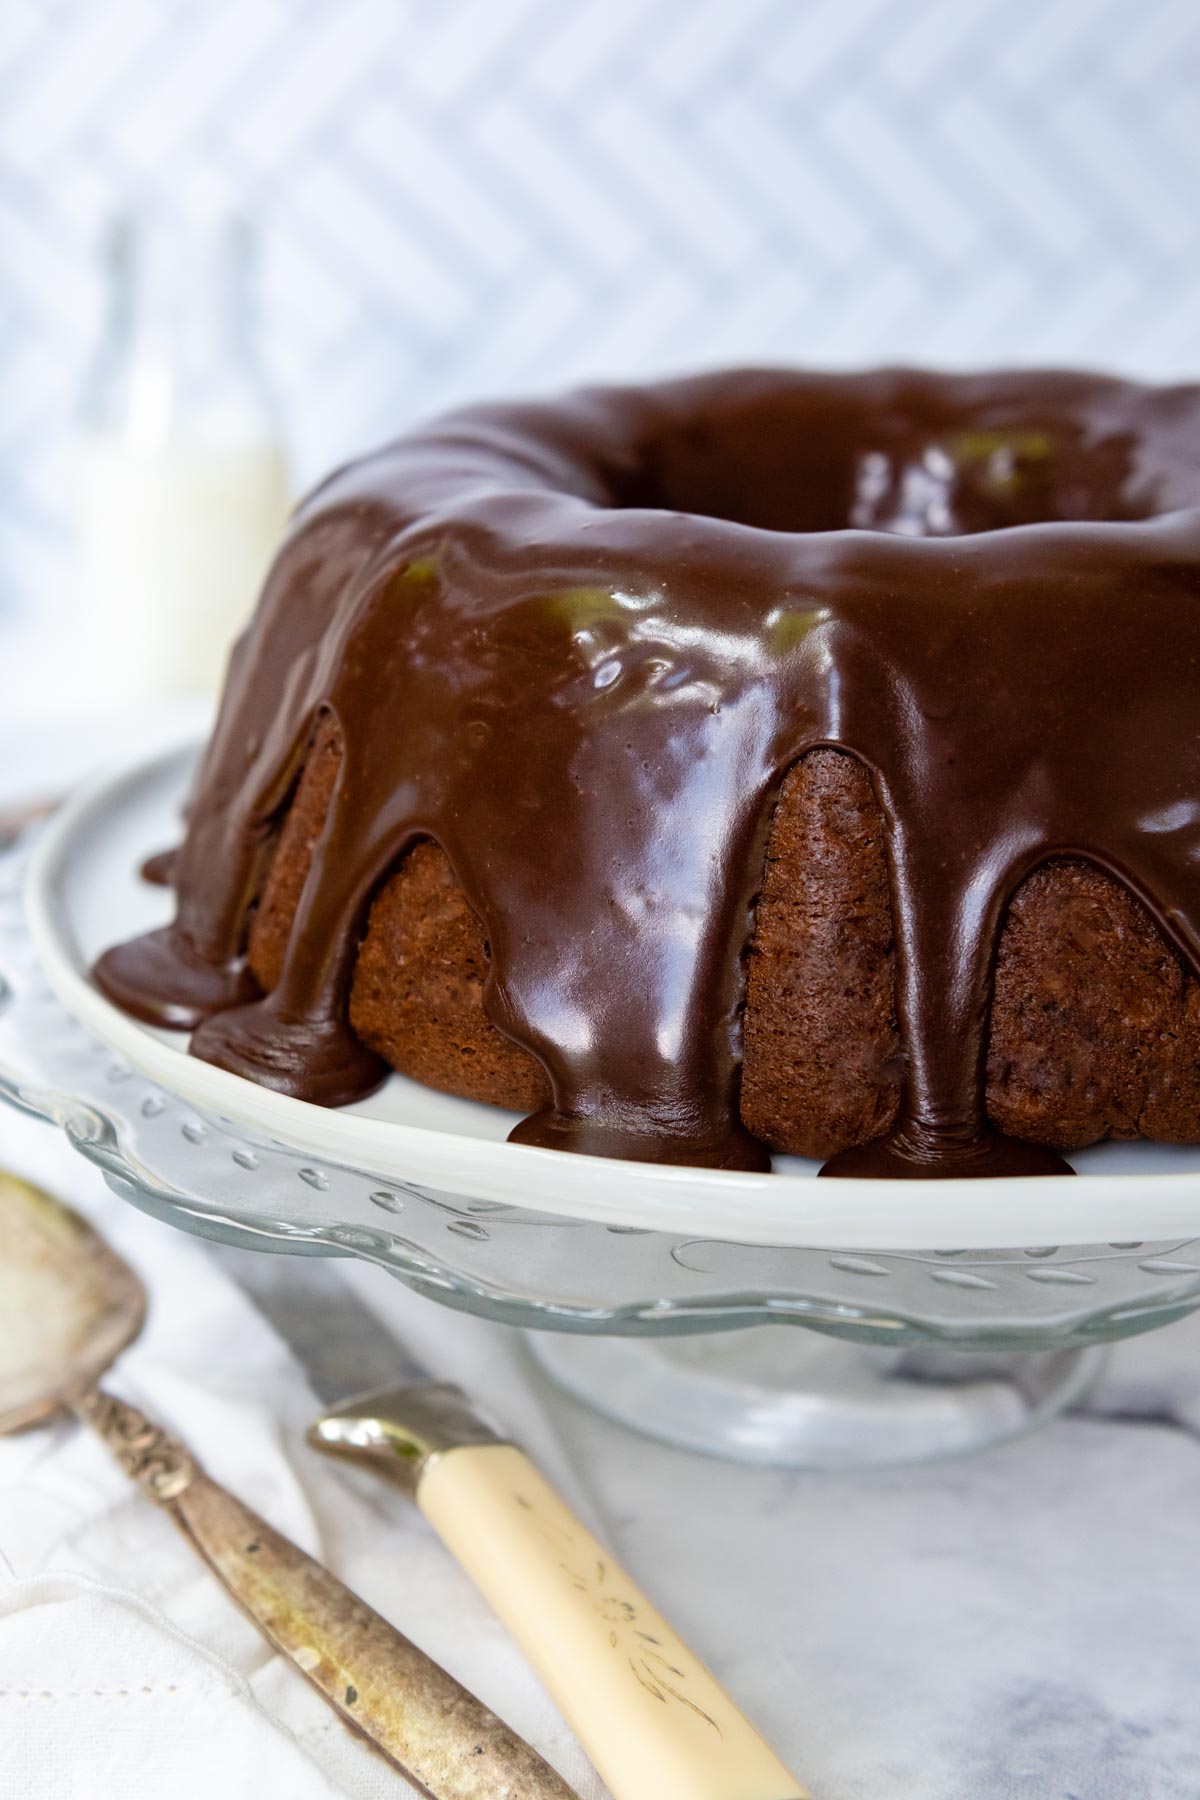 chocolate glaze on the bundt cake.